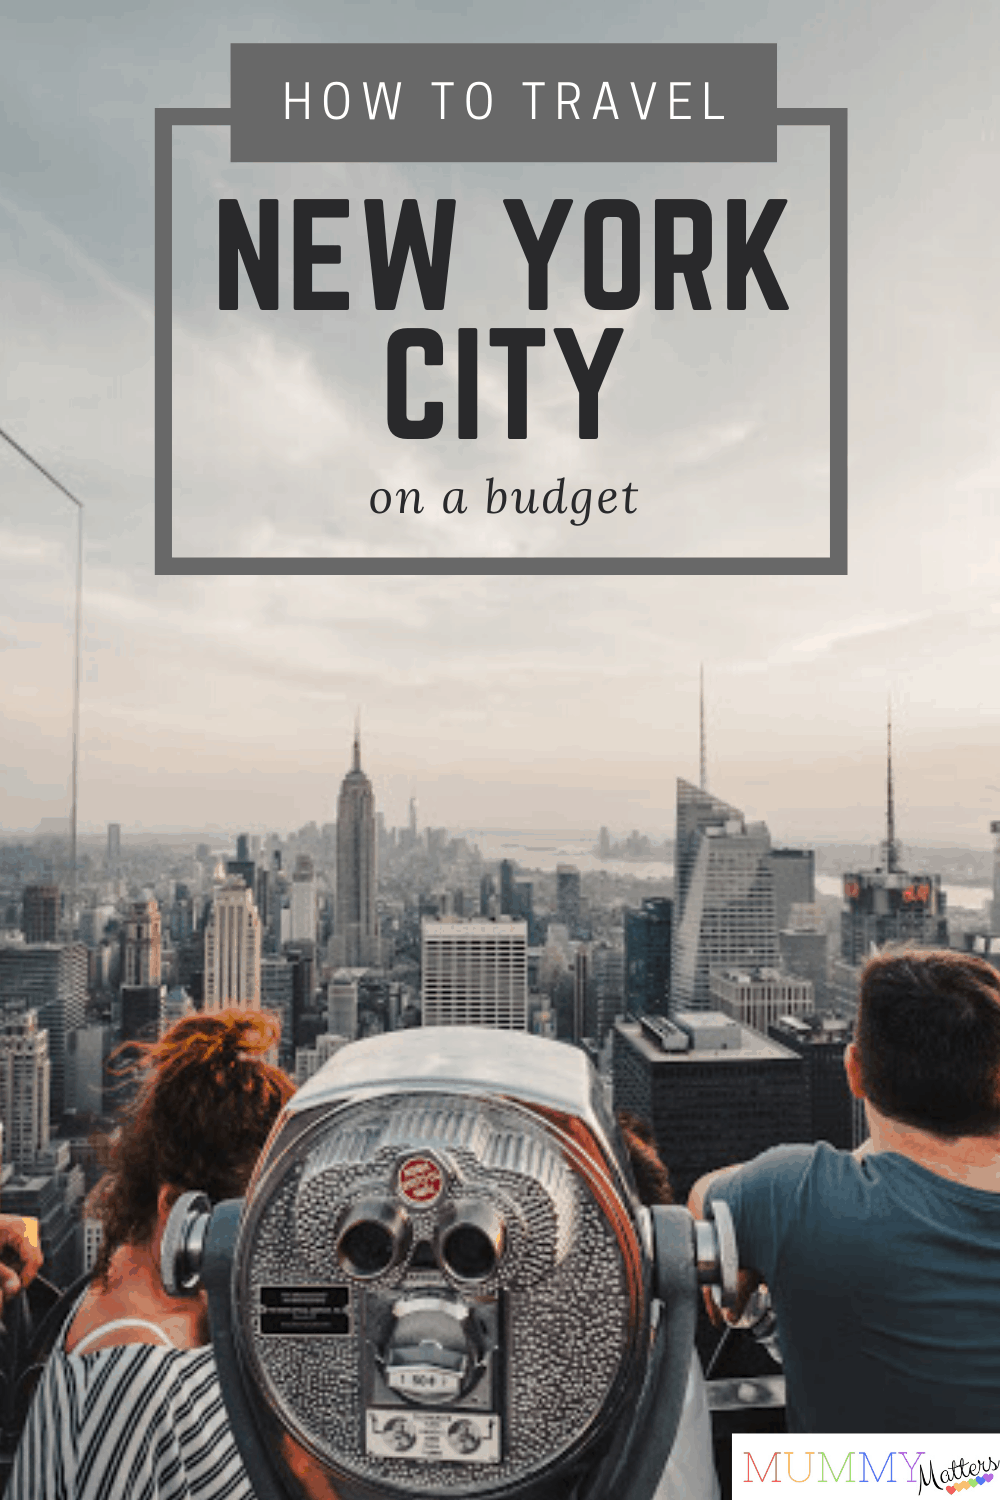 New York City on a budget